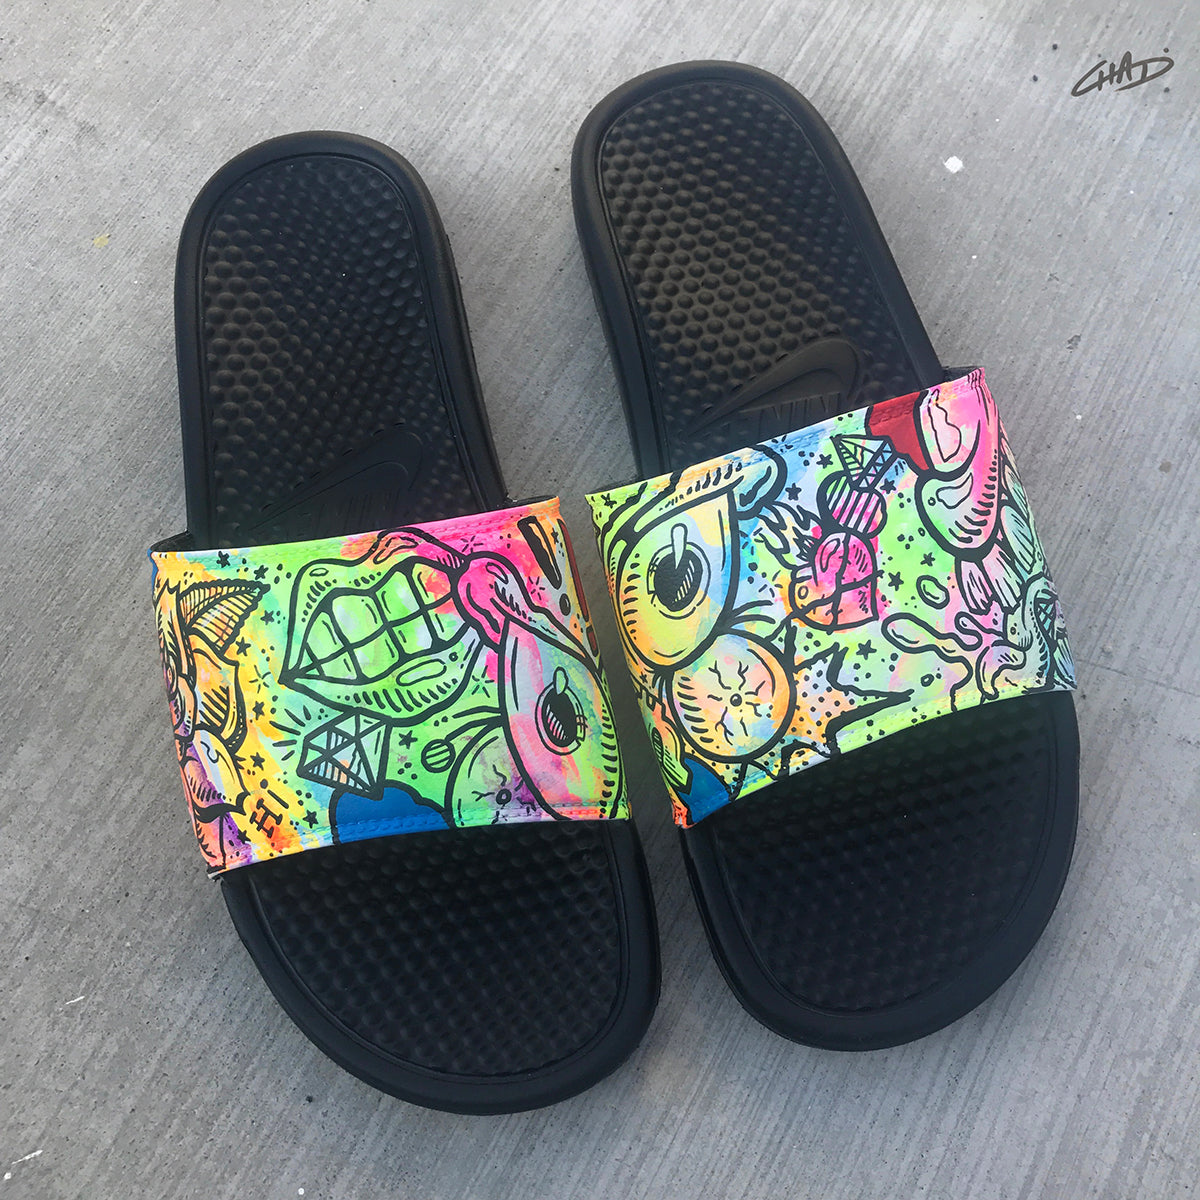 Battery Acid - Hand Painted Nike Slides aka Sandals, Flip Flops